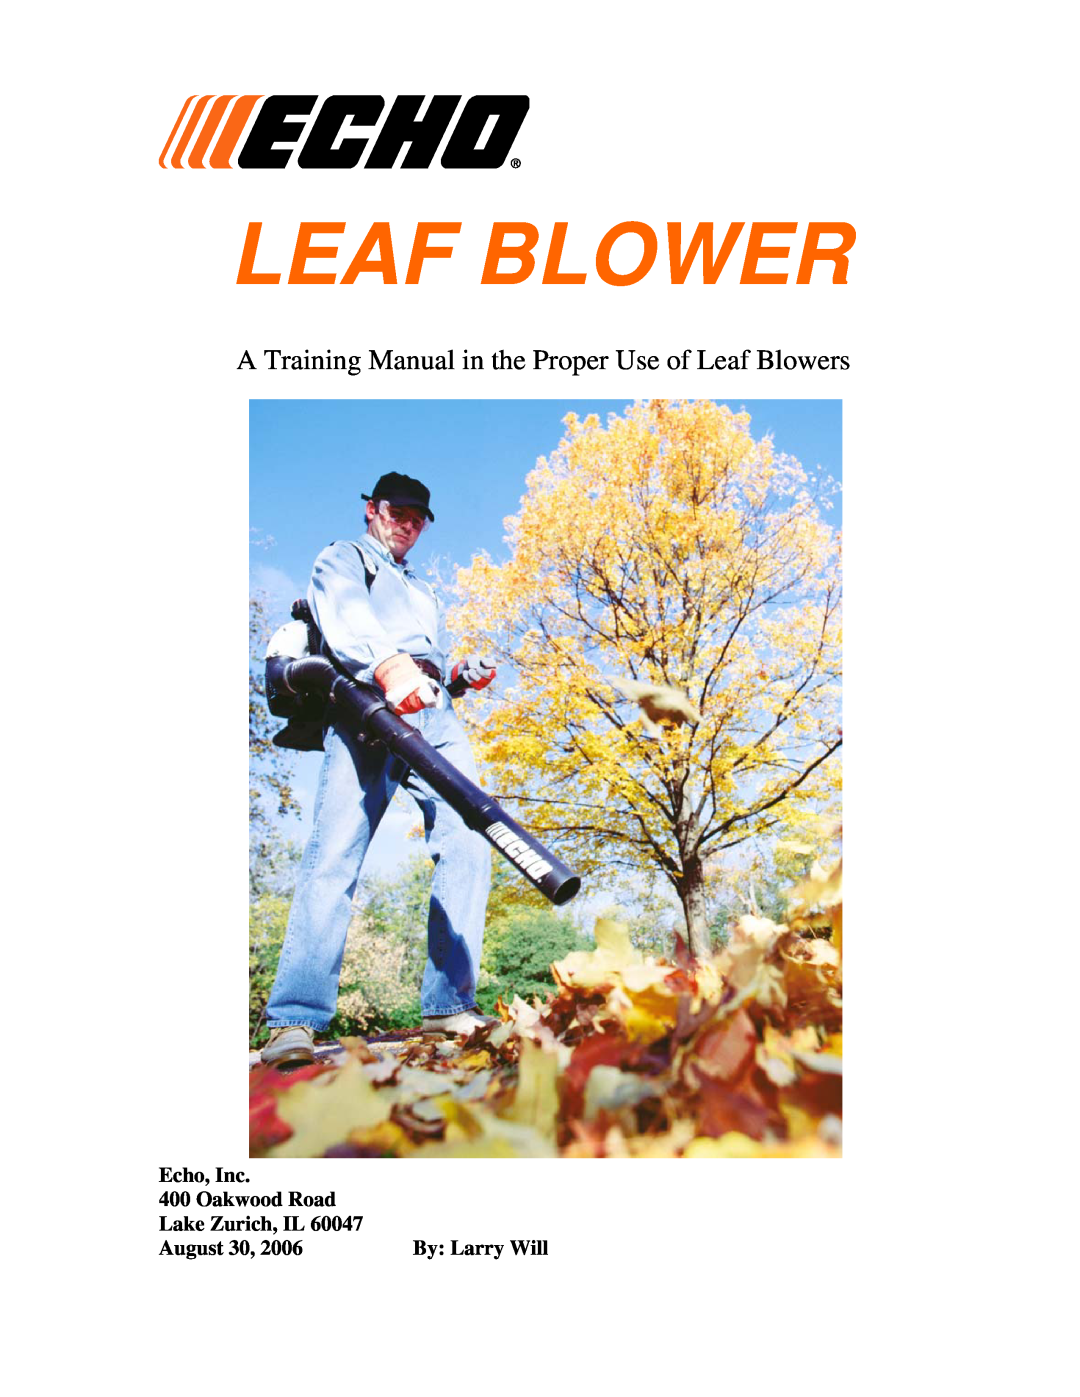 Echo LEAF BLOWER manual Leaf Blower, Echo, Inc, Oakwood Road, Lake Zurich, IL, August, By: Larry Will 